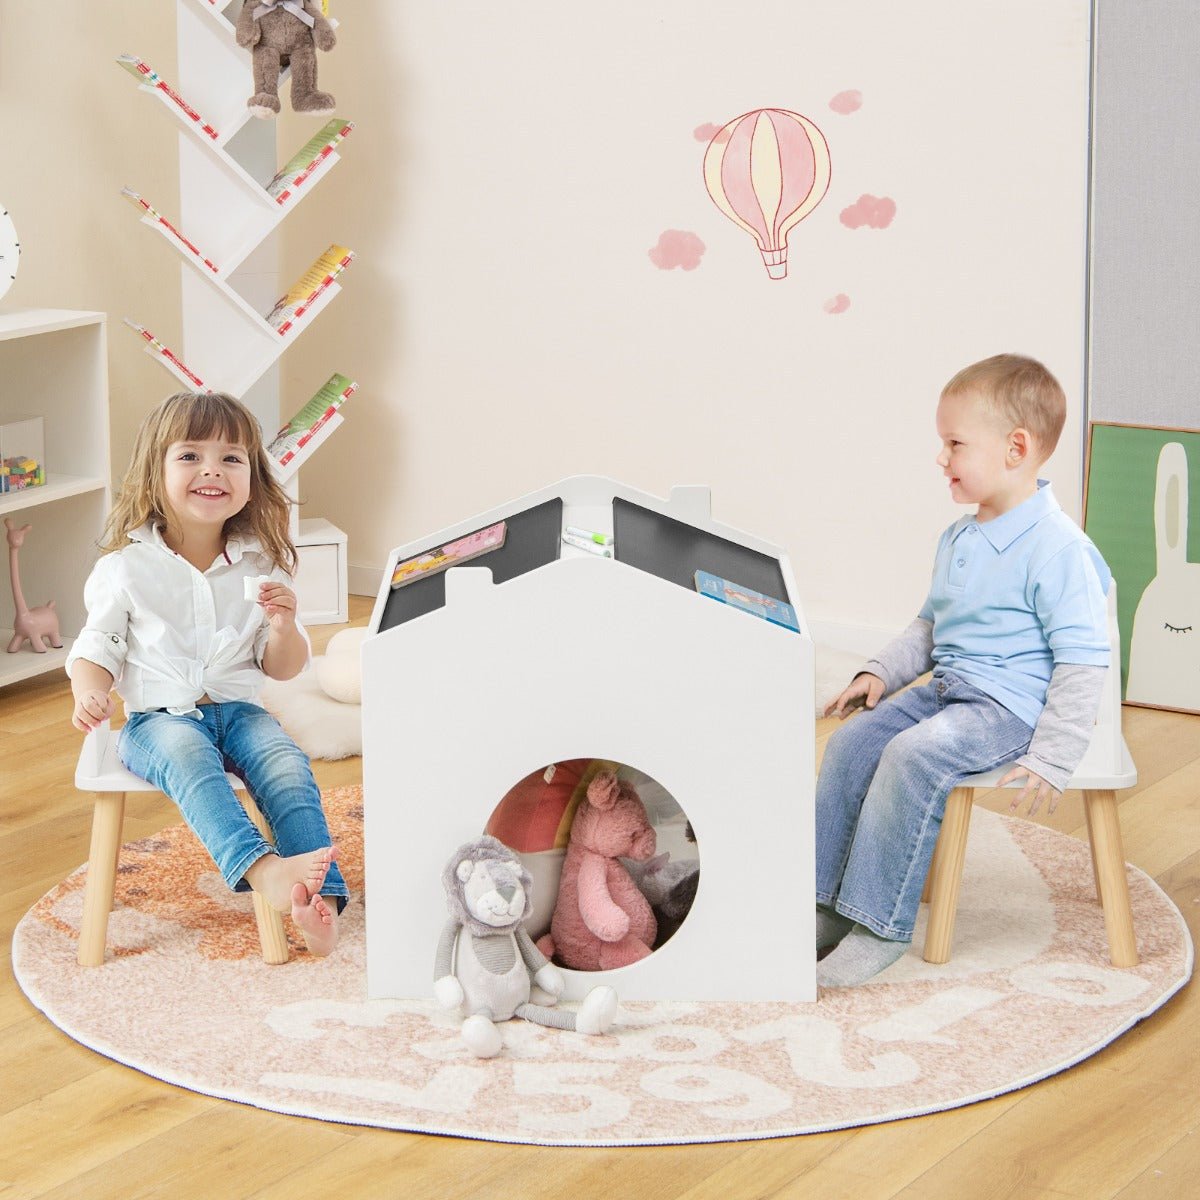 Chalkboard Kids Furniture Set: Imaginative White Table and Chairs